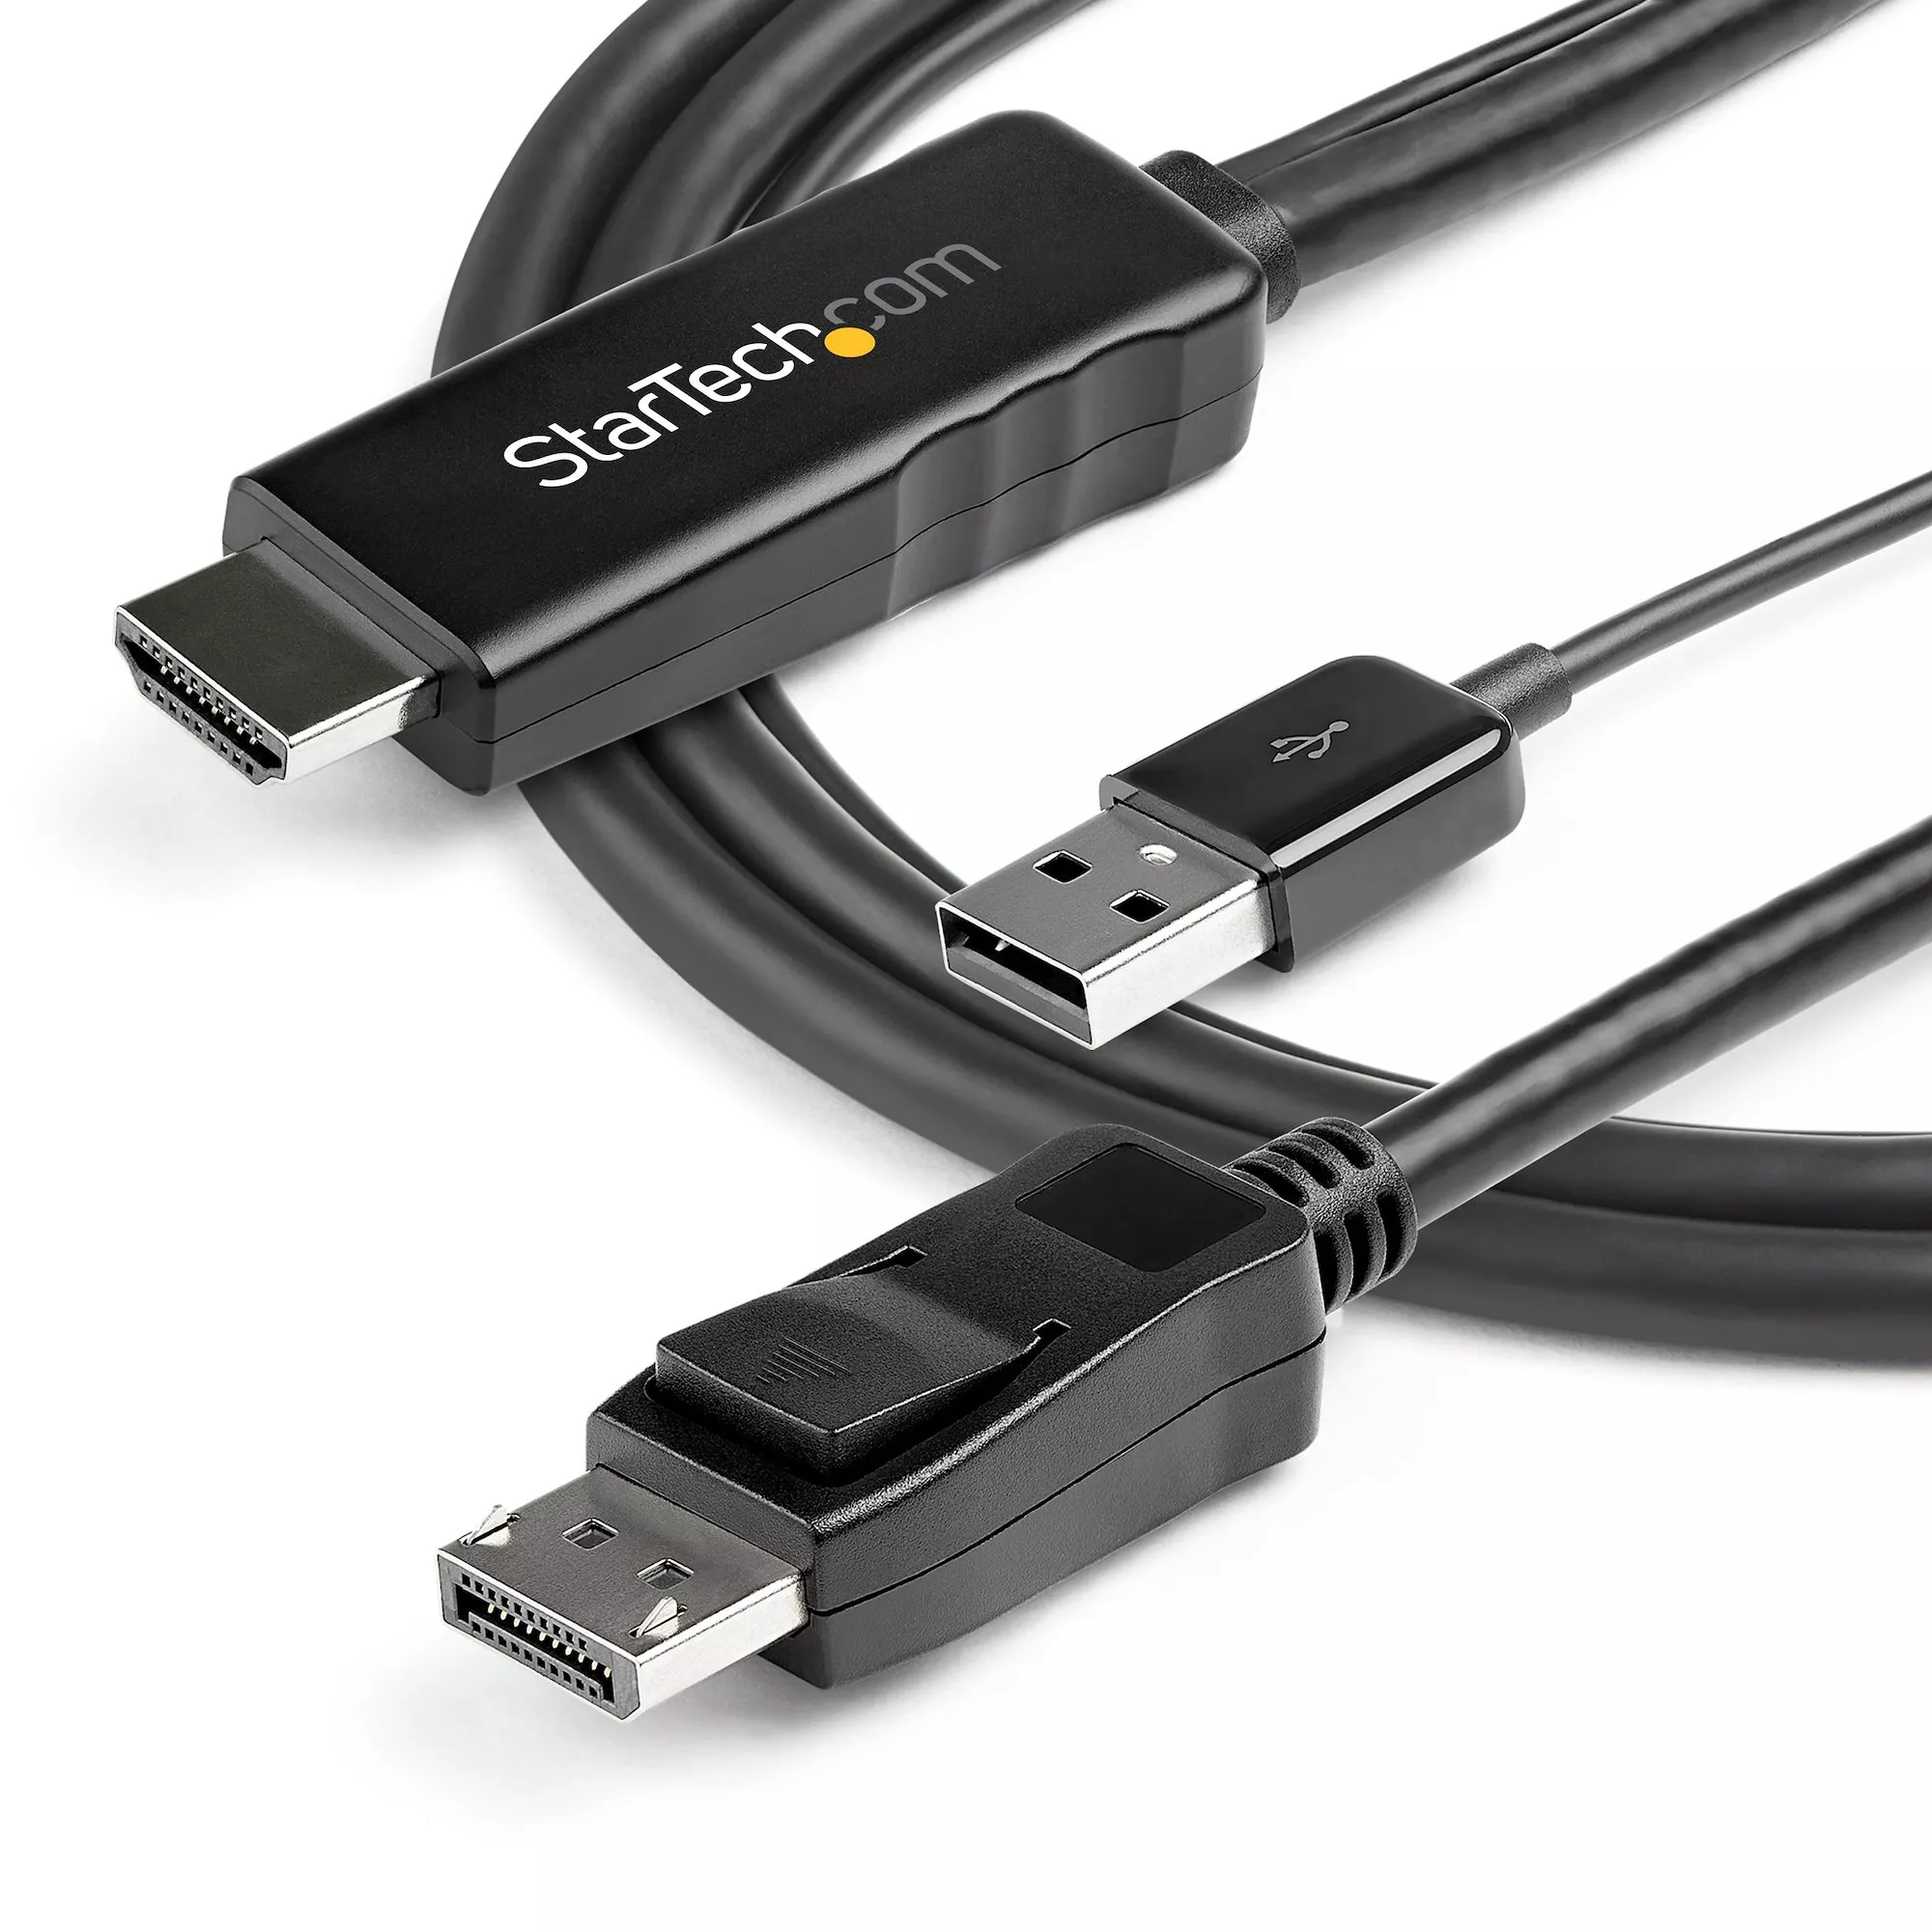 Adaptateur Mini DisplayPort vers HDMI - Convertisseur Vidéo mDP vers HDMI -  1080p - Mini DP ou Thunderbolt 1/2 Mac/PC vers Moniteur/TV HDMI - Dongle